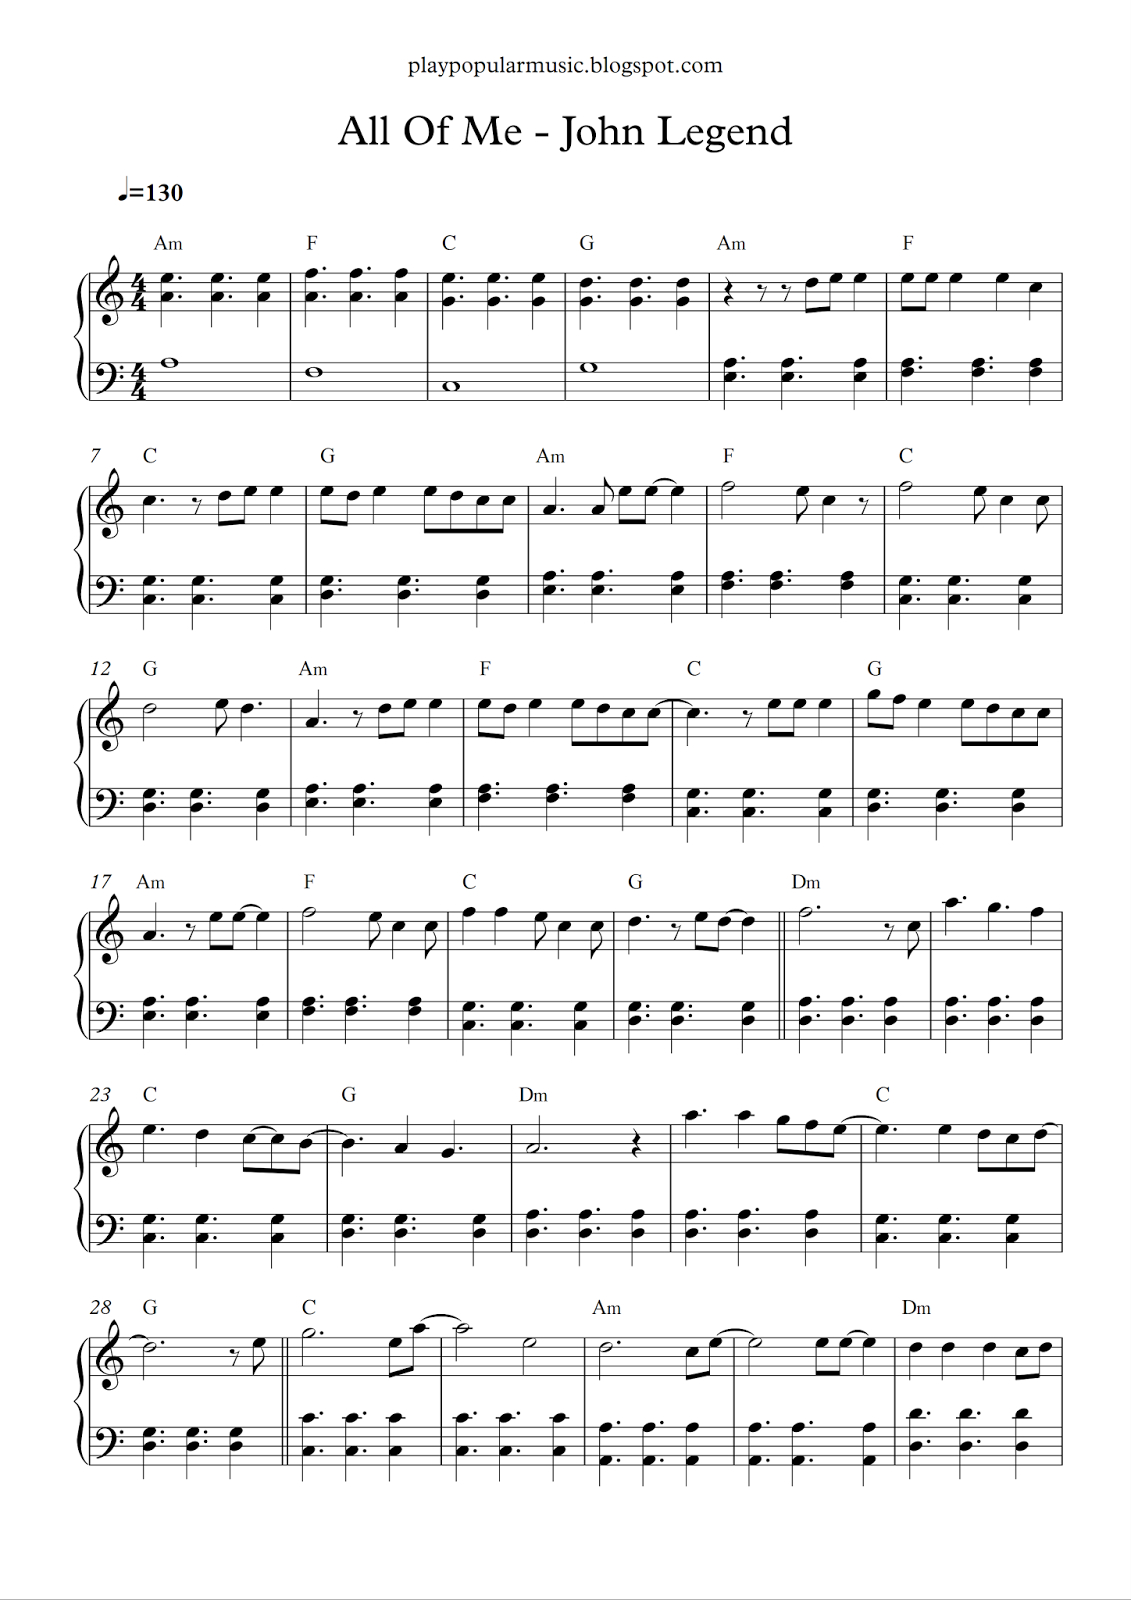 Free Piano Sheet Music: All Of Me - John Legend.pdf What's Going On - All Of Me Easy Piano Sheet Music Free Printable